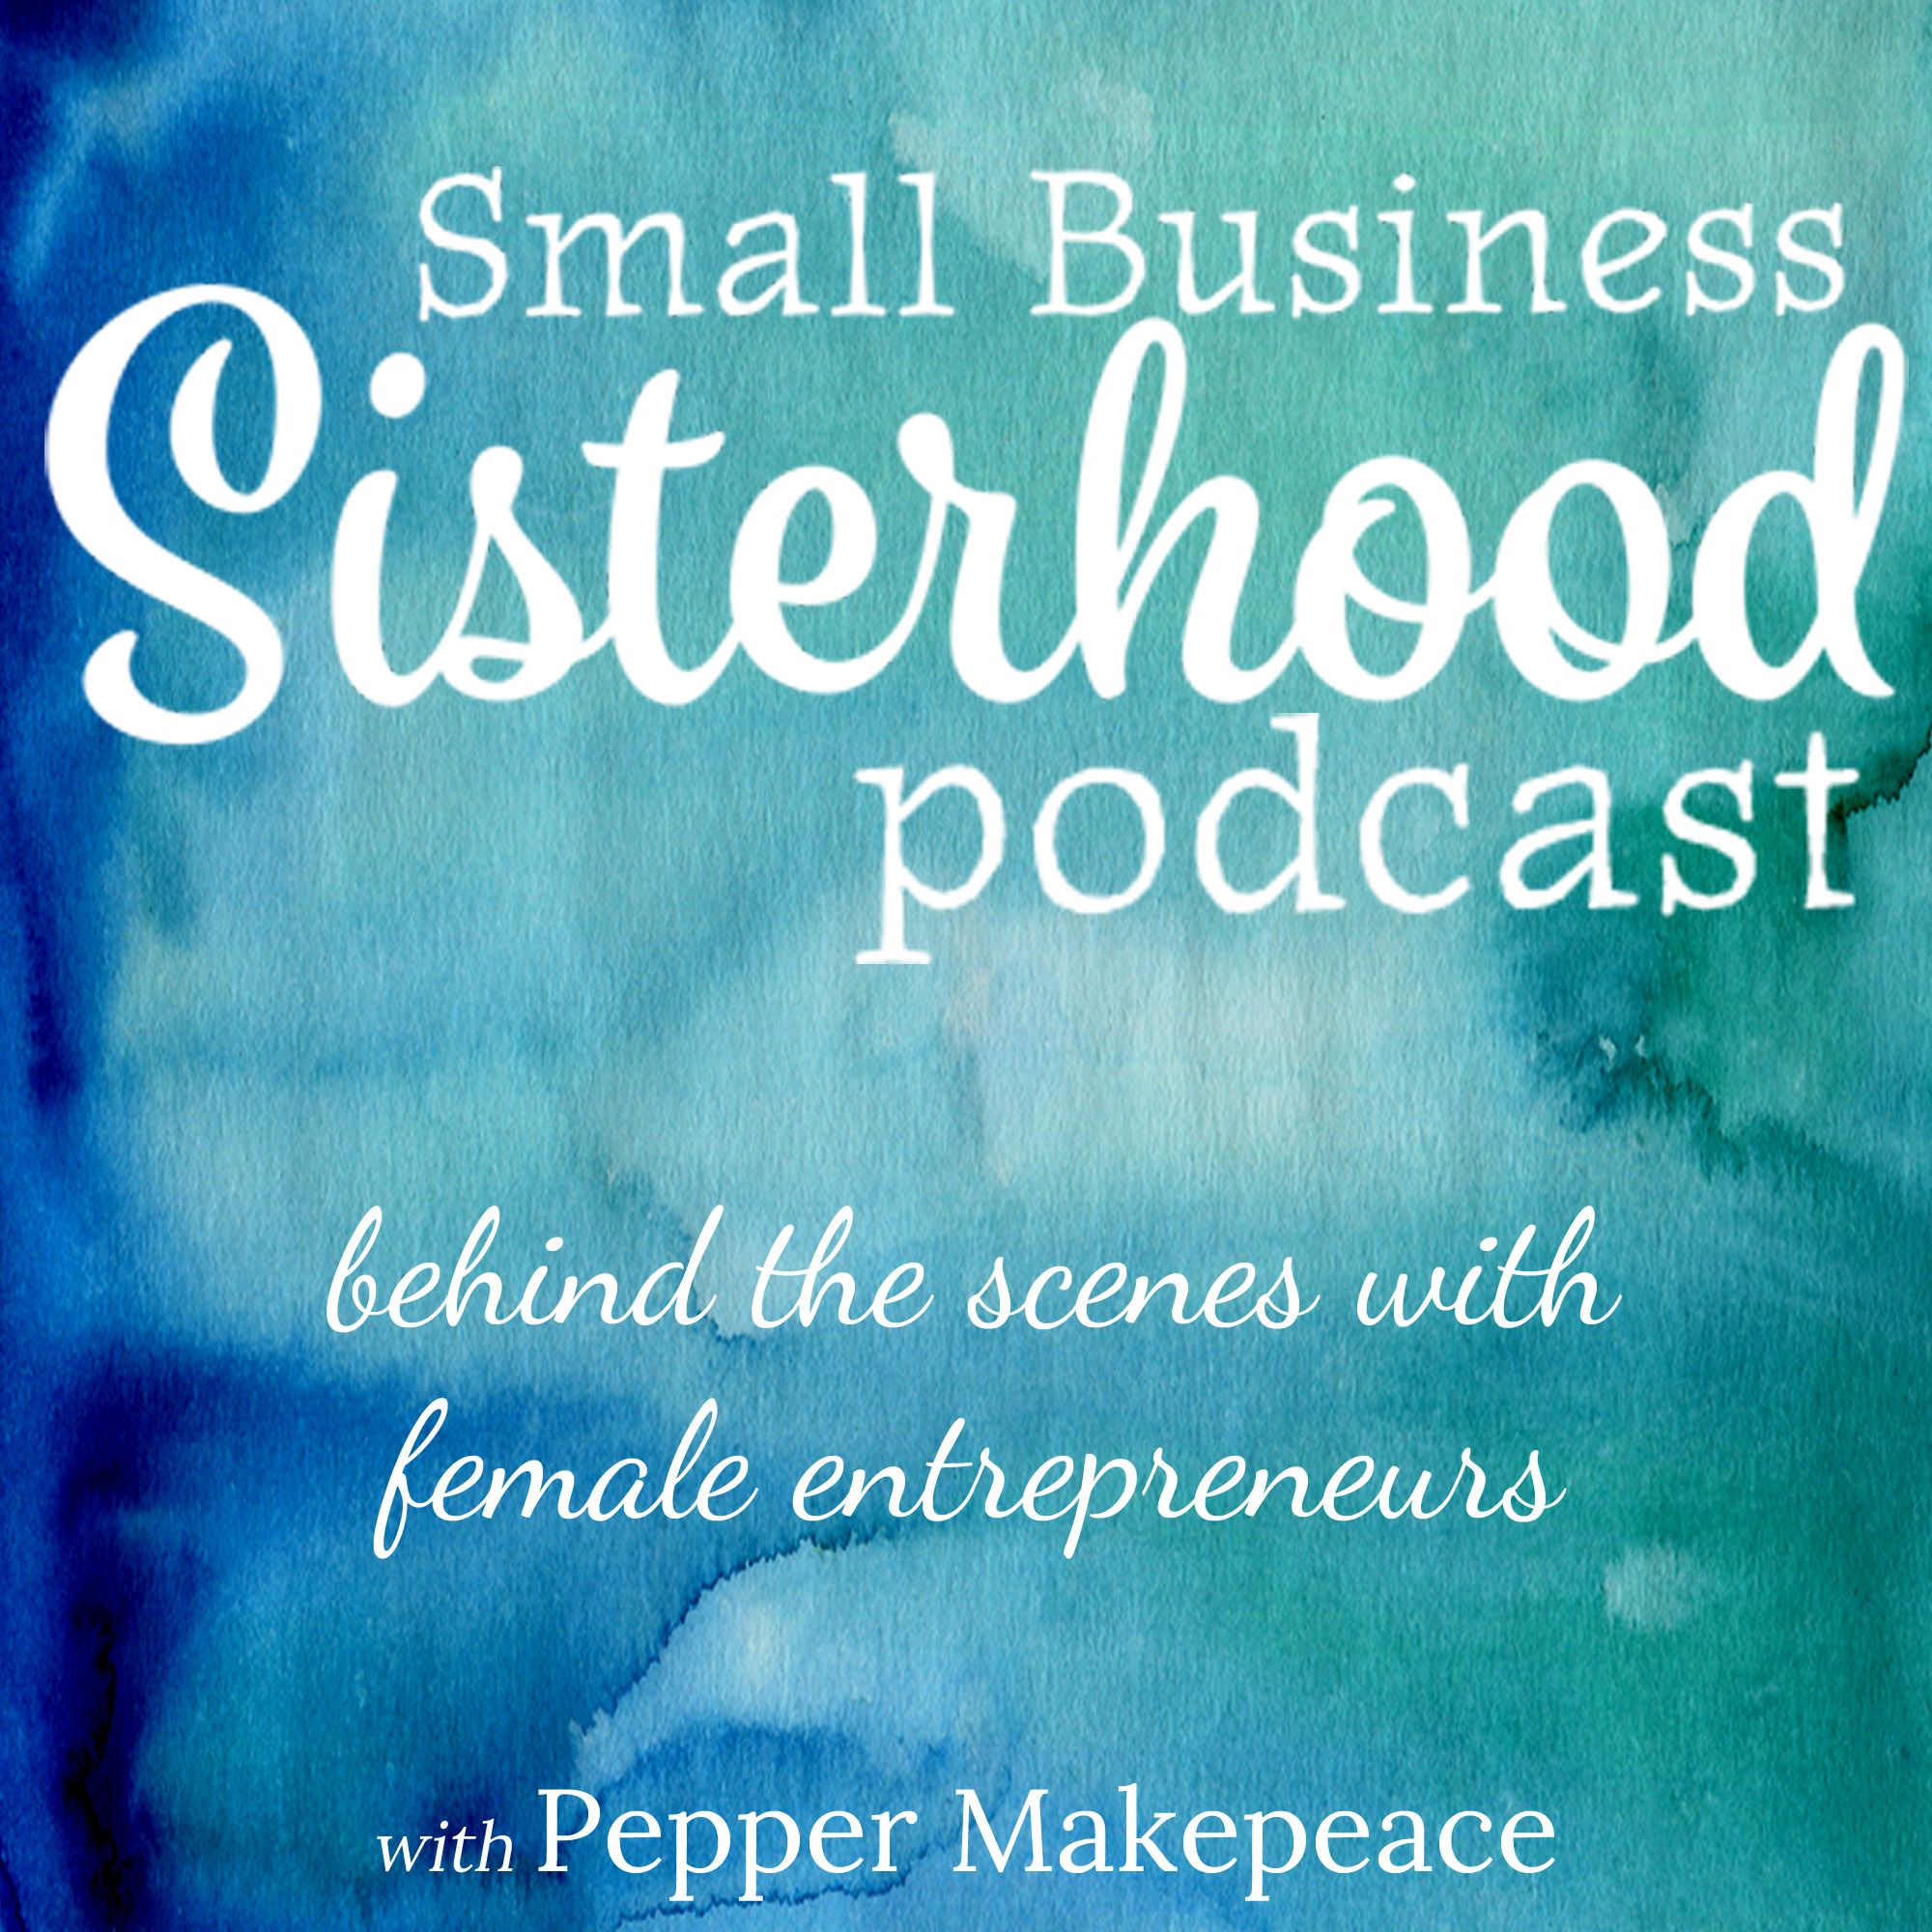 Small Business Sisterhood Podcast: Online Business, Blogging, Creative Entrepreneurs, Business Community